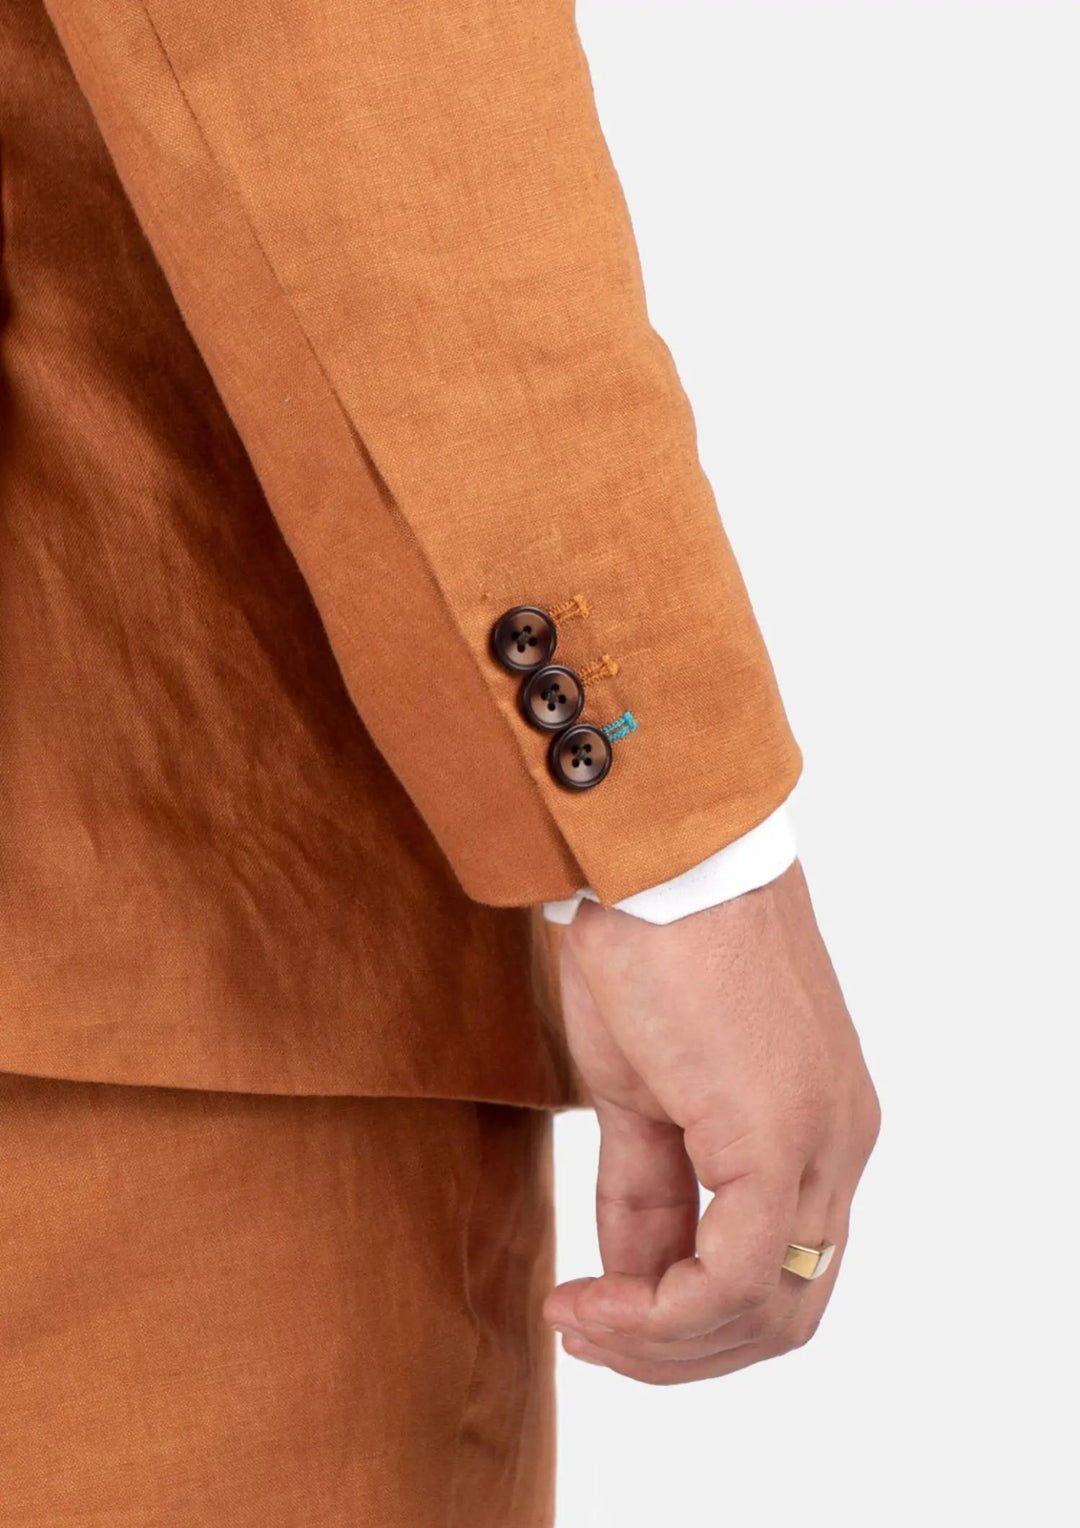 Waverly Burnt Orange Linen Suit - SARTORO